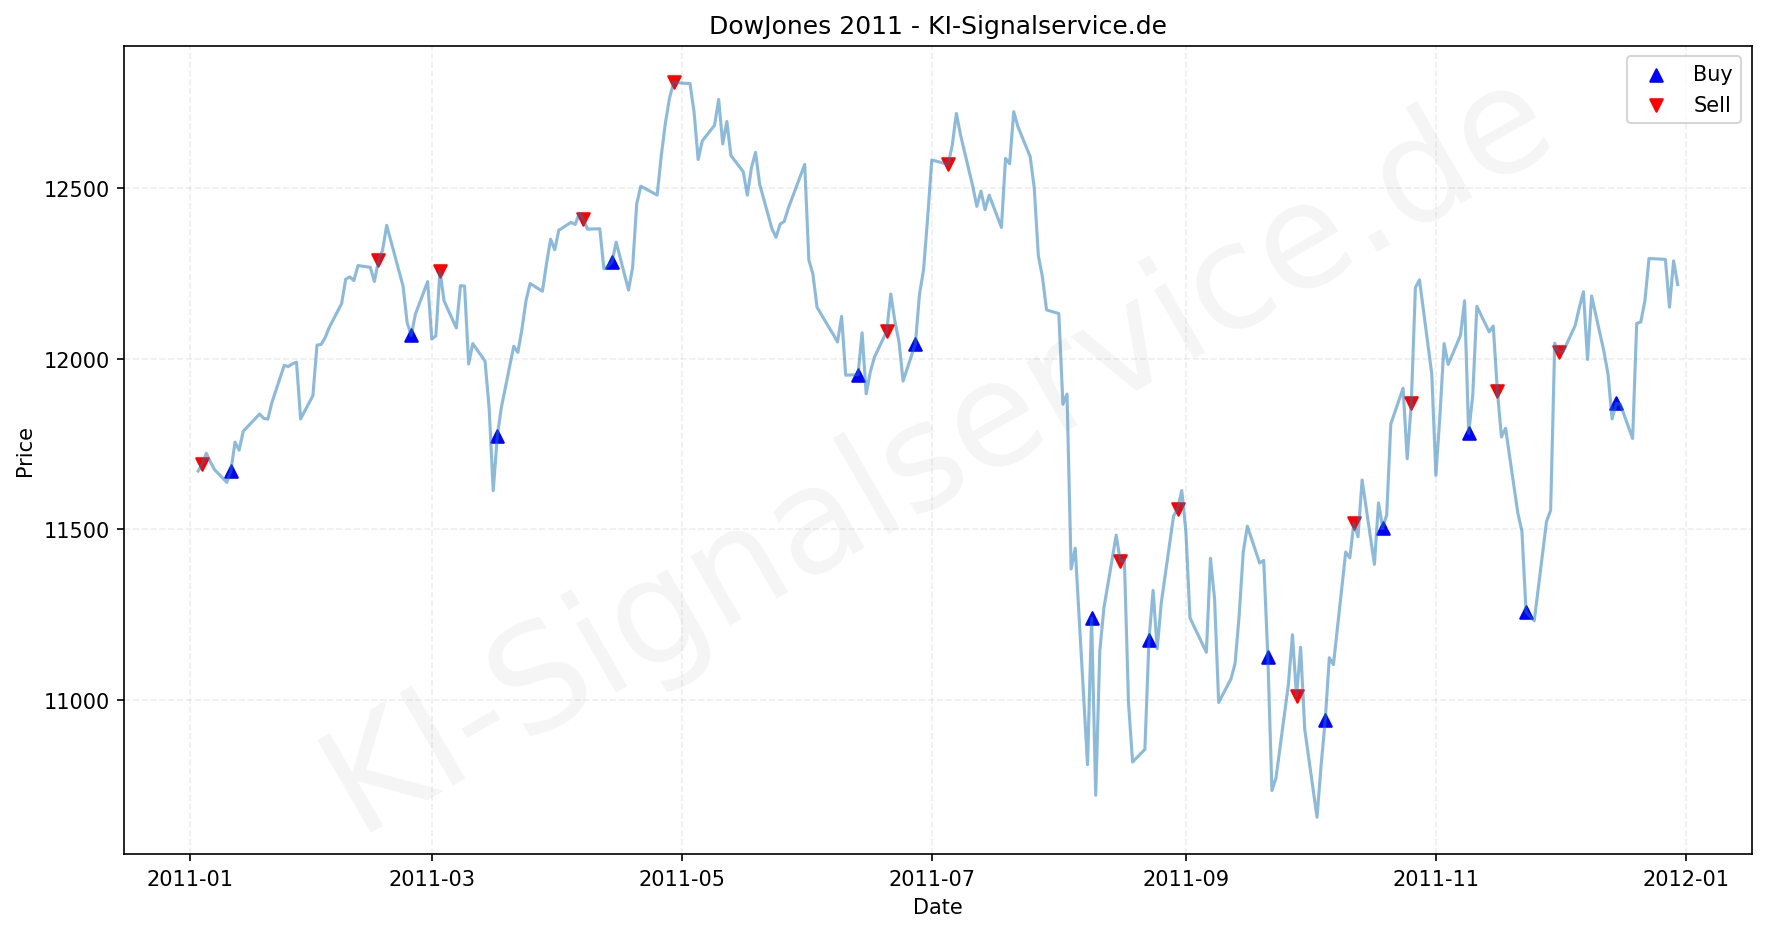 DOWJONES Index Performance Chart - KI Tradingsignale 2011